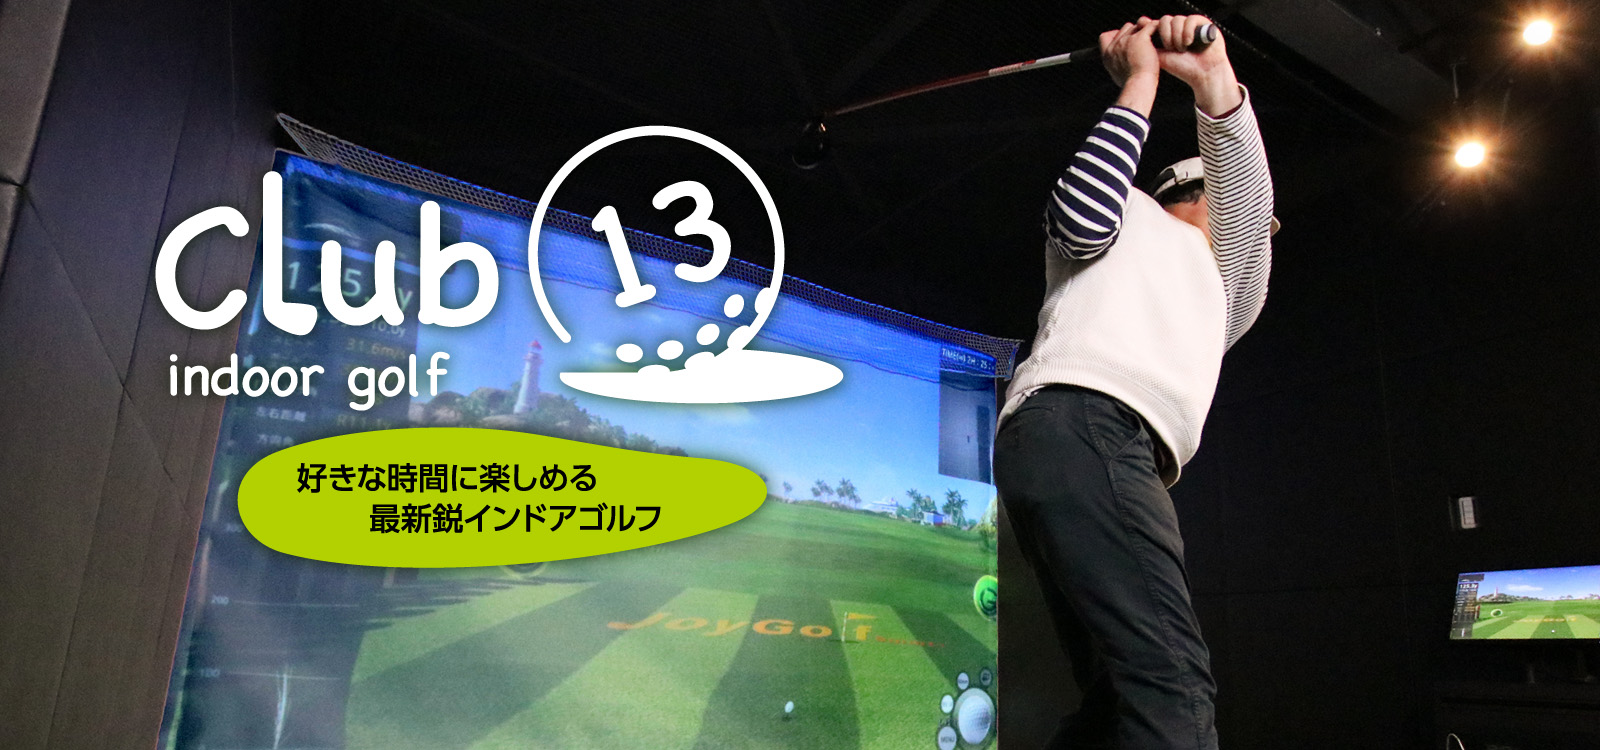 club13 ～インドア・シミュレーションゴルフ～ 【湘南藤沢】　好きな時間に楽しめる最新鋭インドアゴルフ